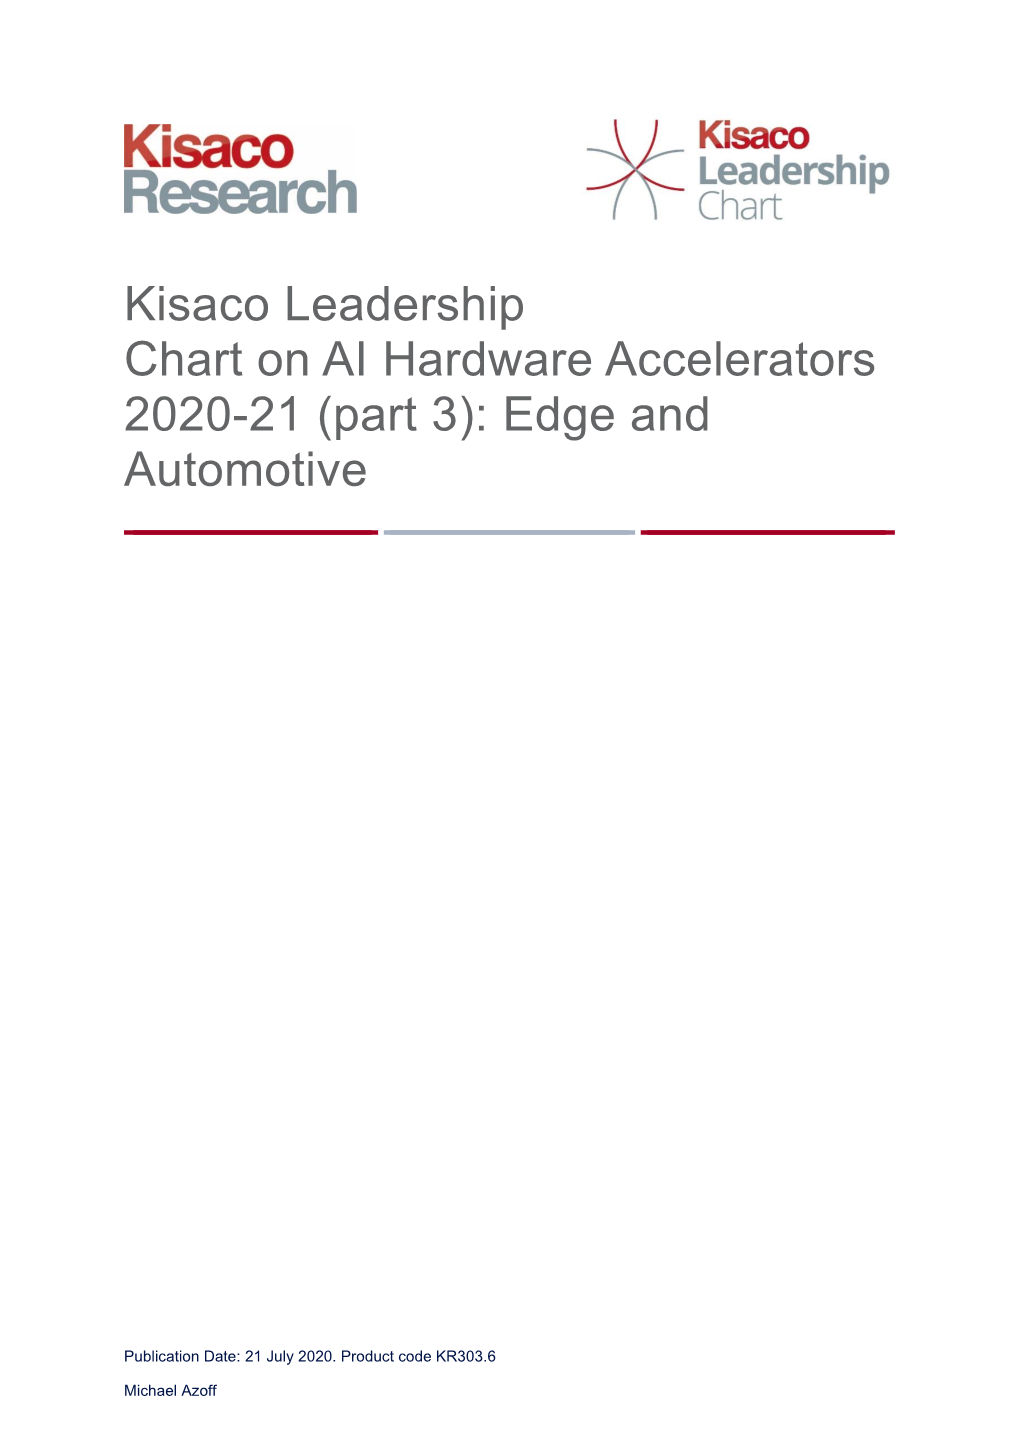 Kisaco Leadership Chart on AI Hardware Accelerators 2020-21 (Part 3): Edge and Automotive